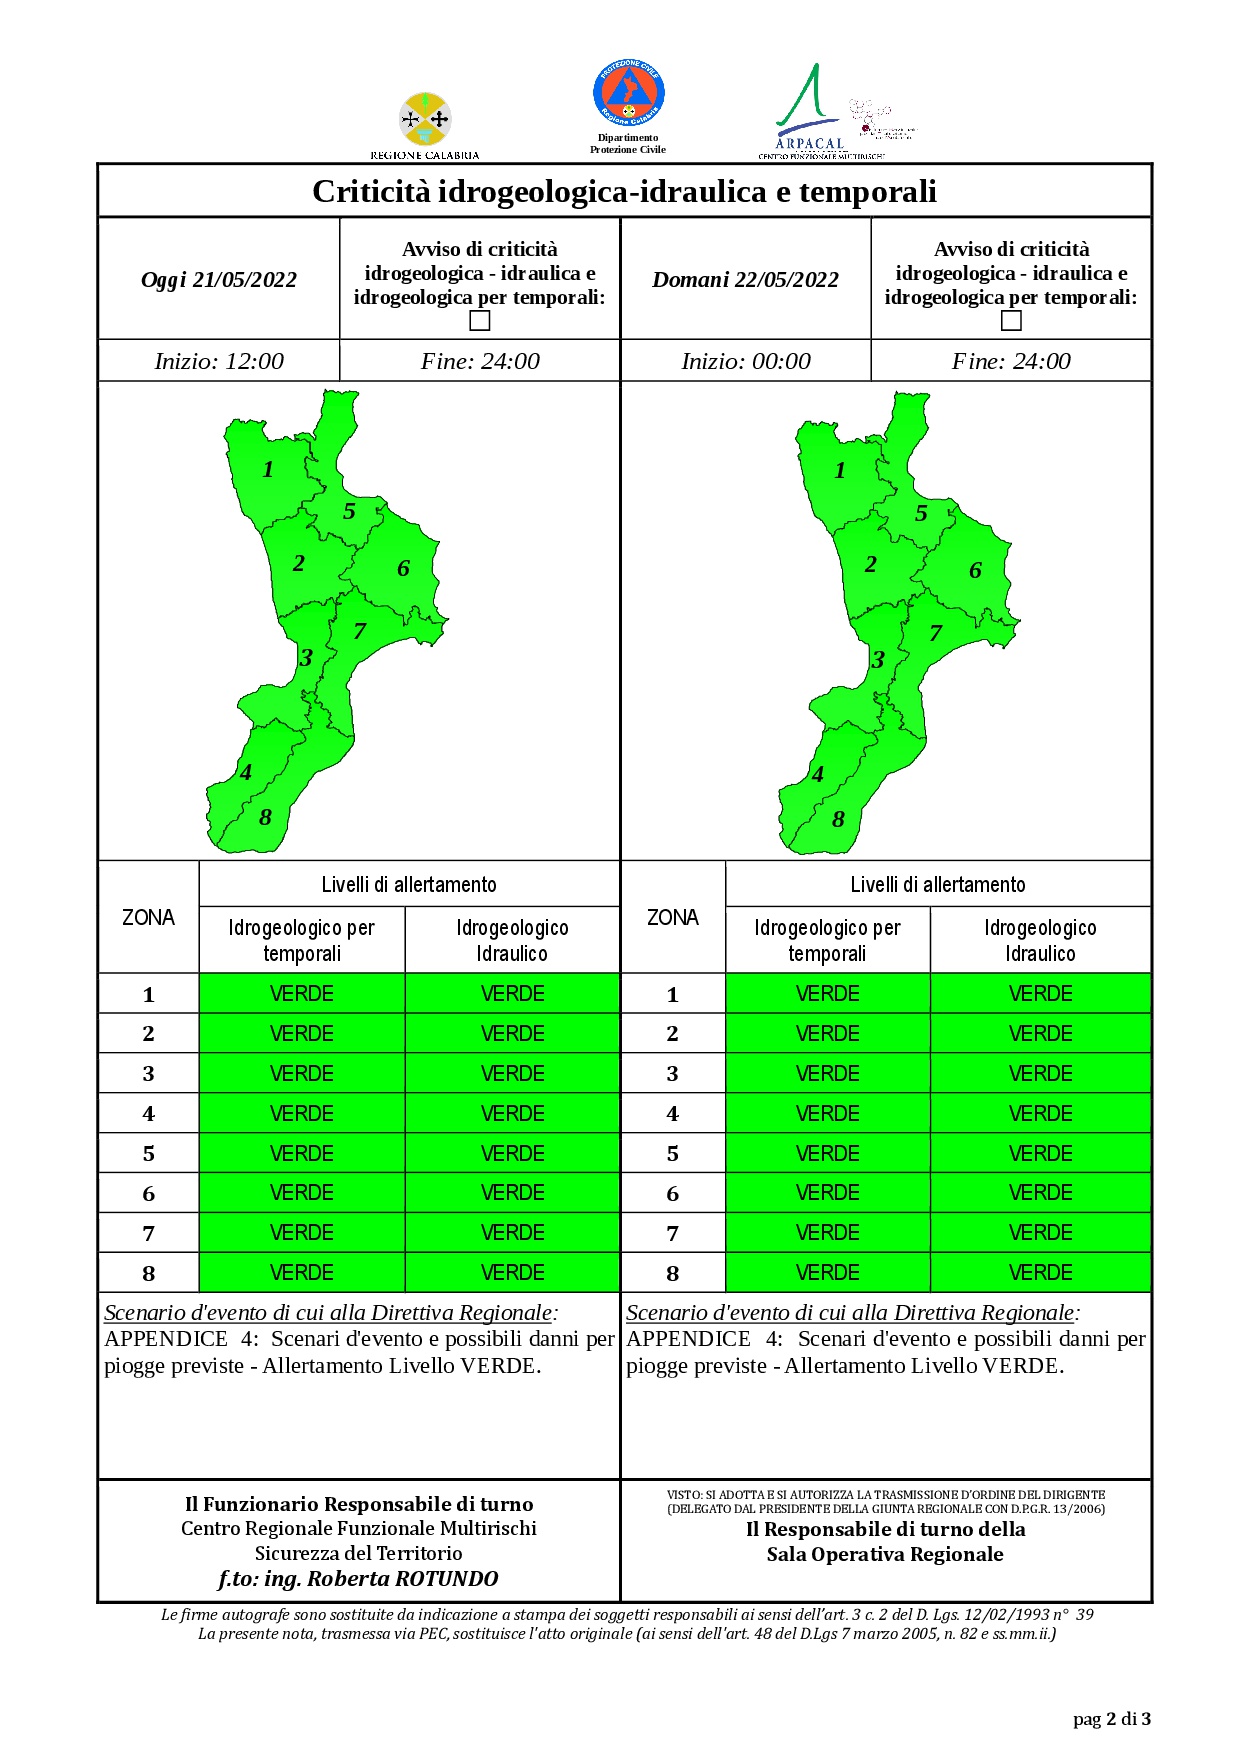 Criticità idrogeologica-idraulica e temporali in Calabria 21-05-2022